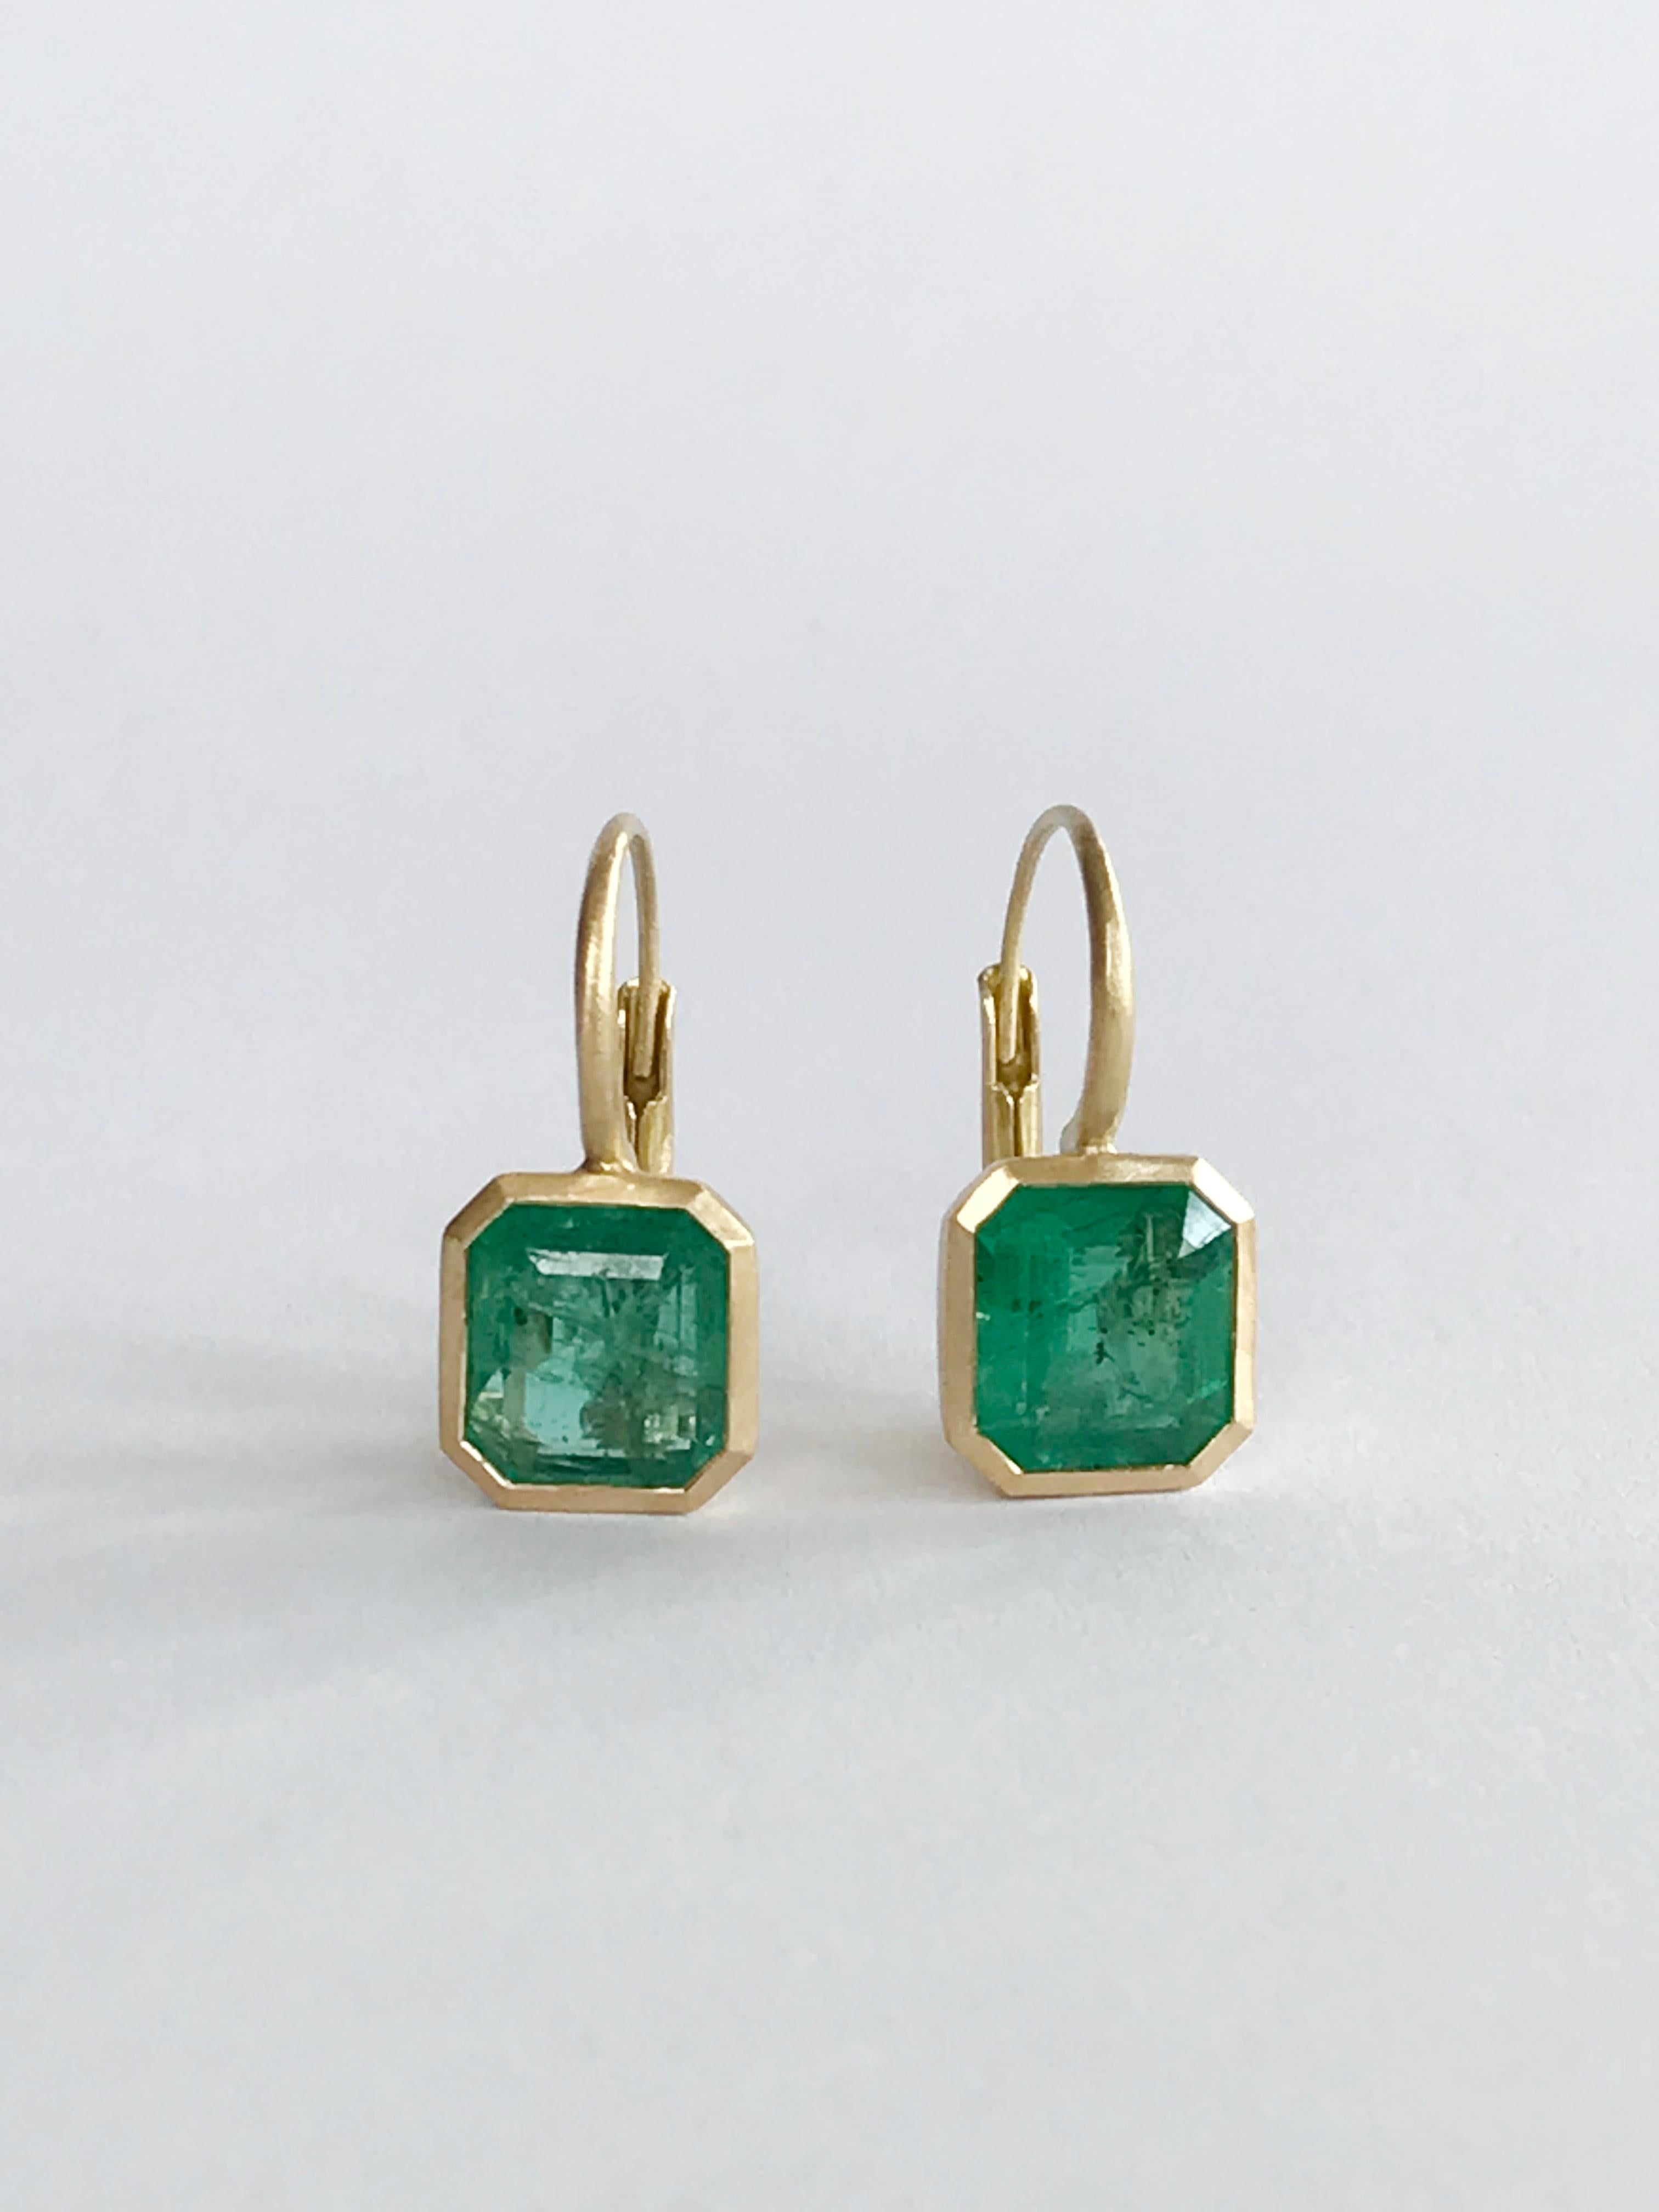 Dalben 4, 42 Carat Emerald Yellow Gold Earrings For Sale 6